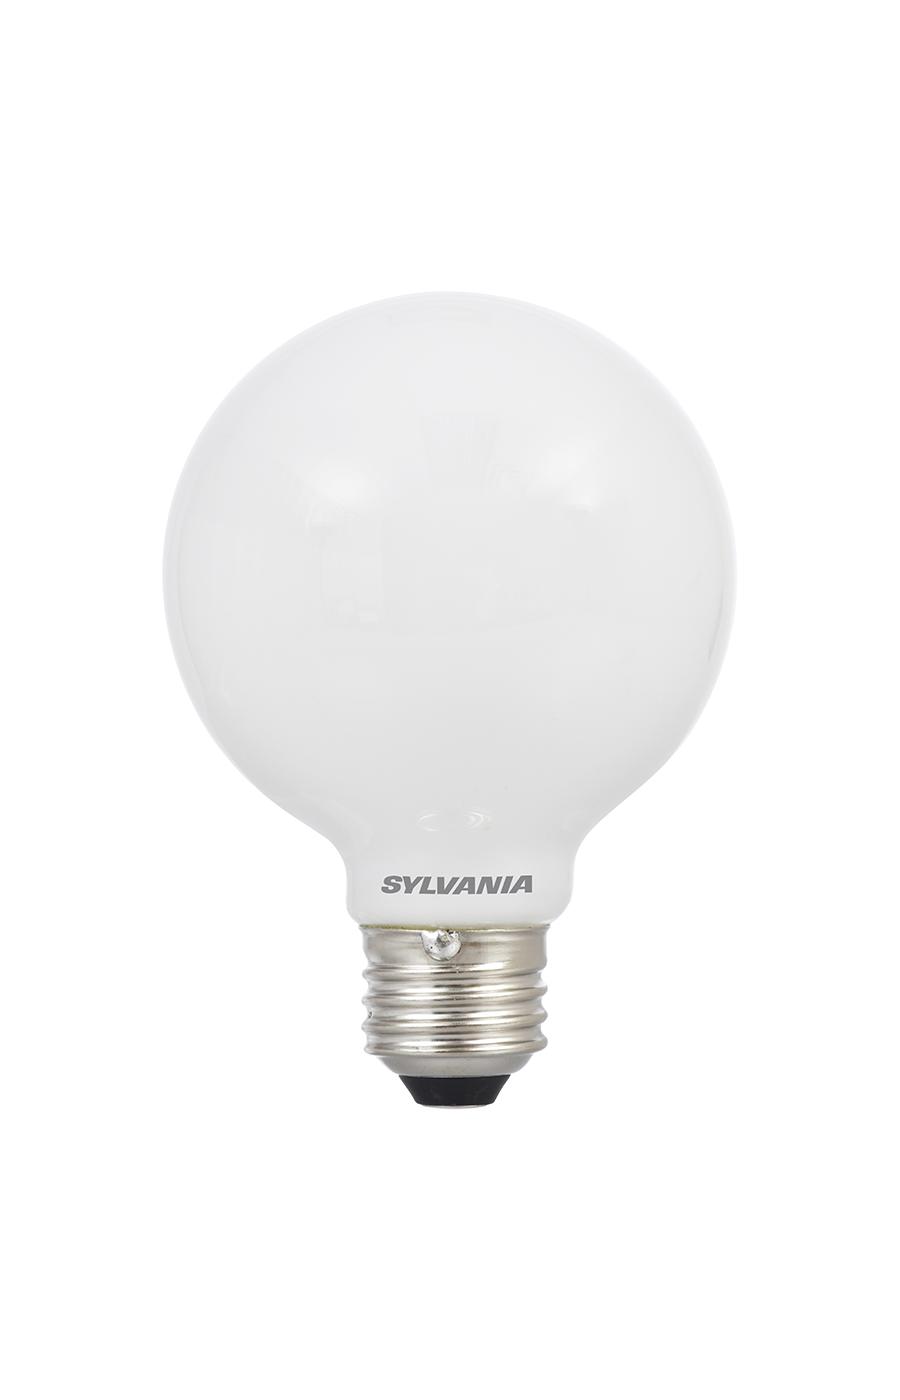 Sylvania TruWave G25 60-Watt Frosted LED Light Bulbs - Daylight; image 2 of 2